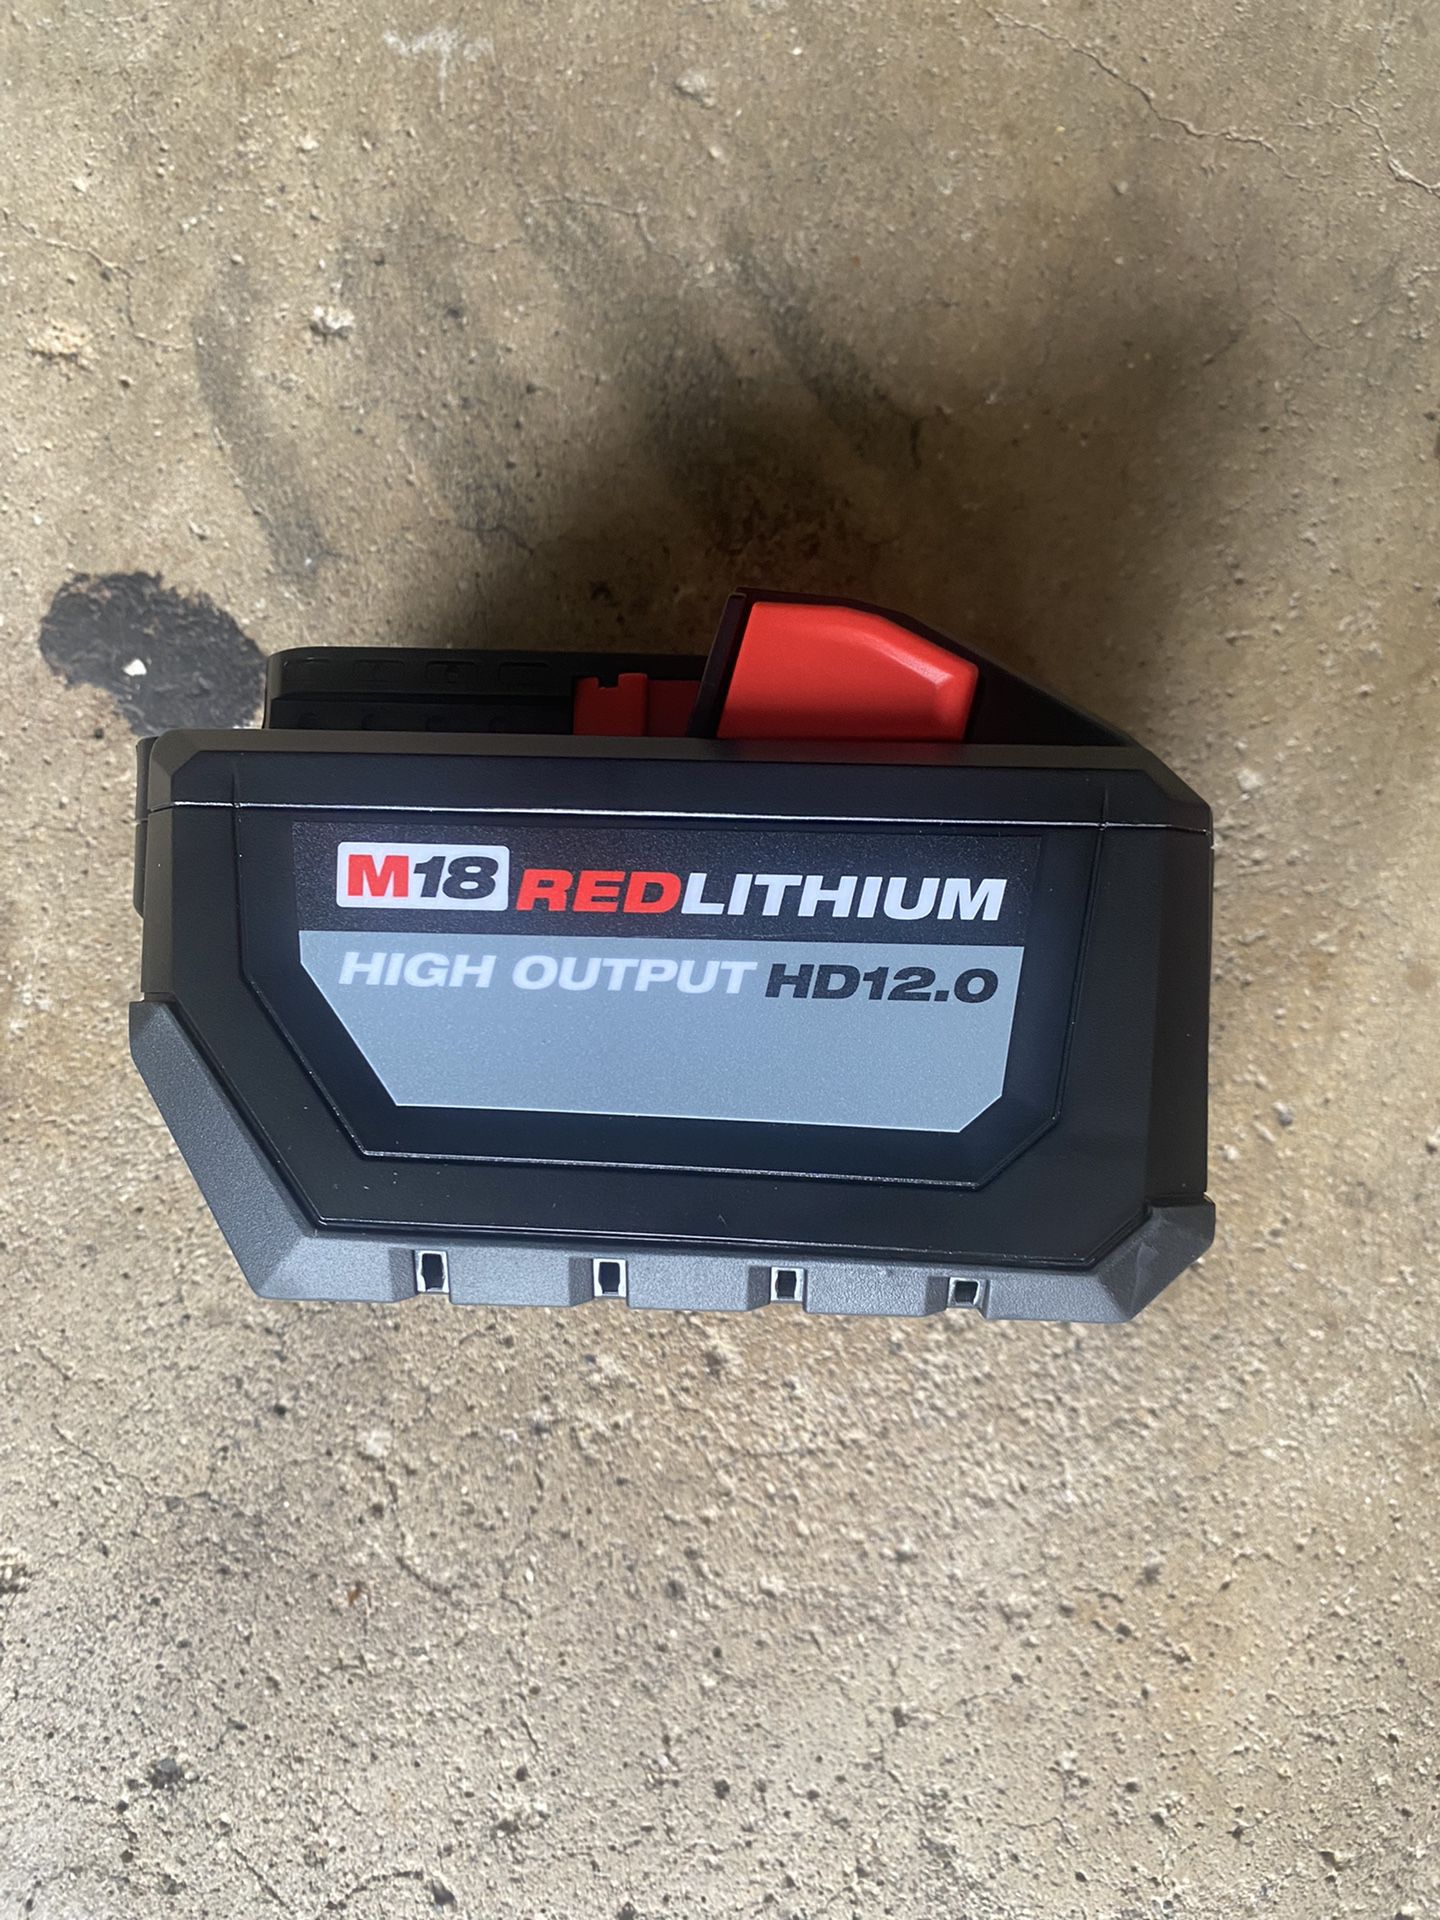 Milwaukee M18 Red Lithium High Output HD12